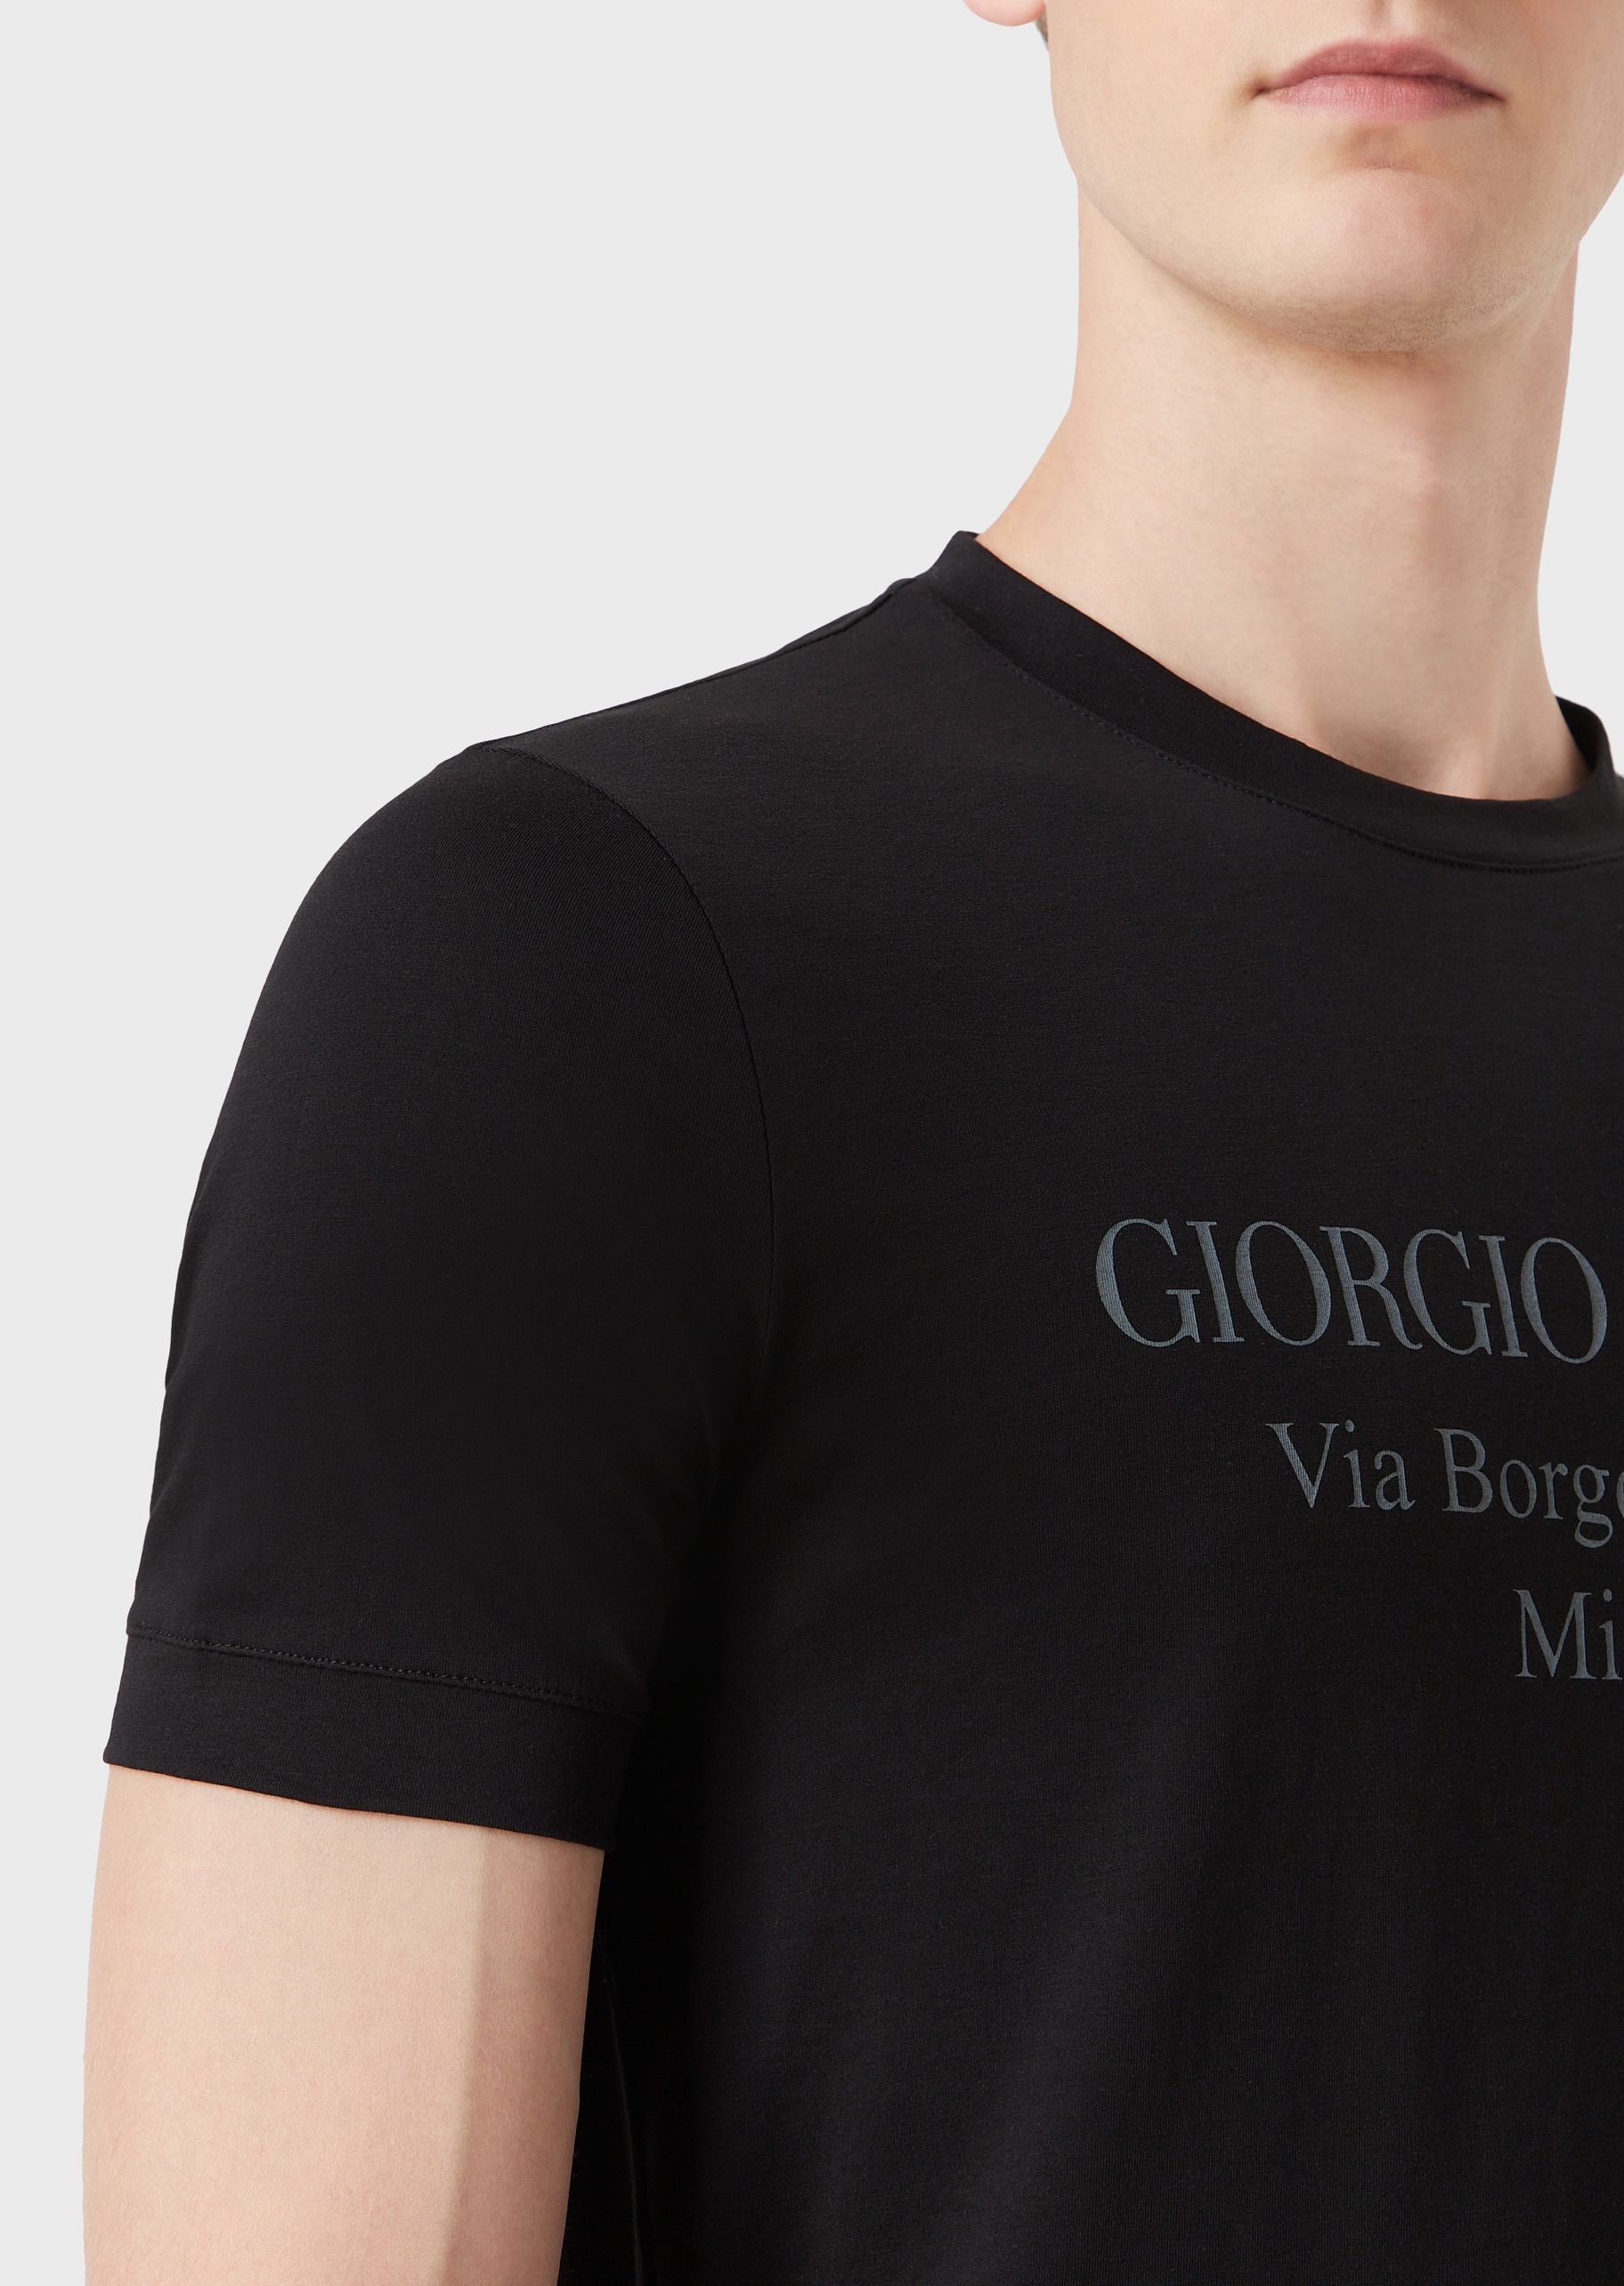 Giorgio Armani 经典棉质短袖T恤